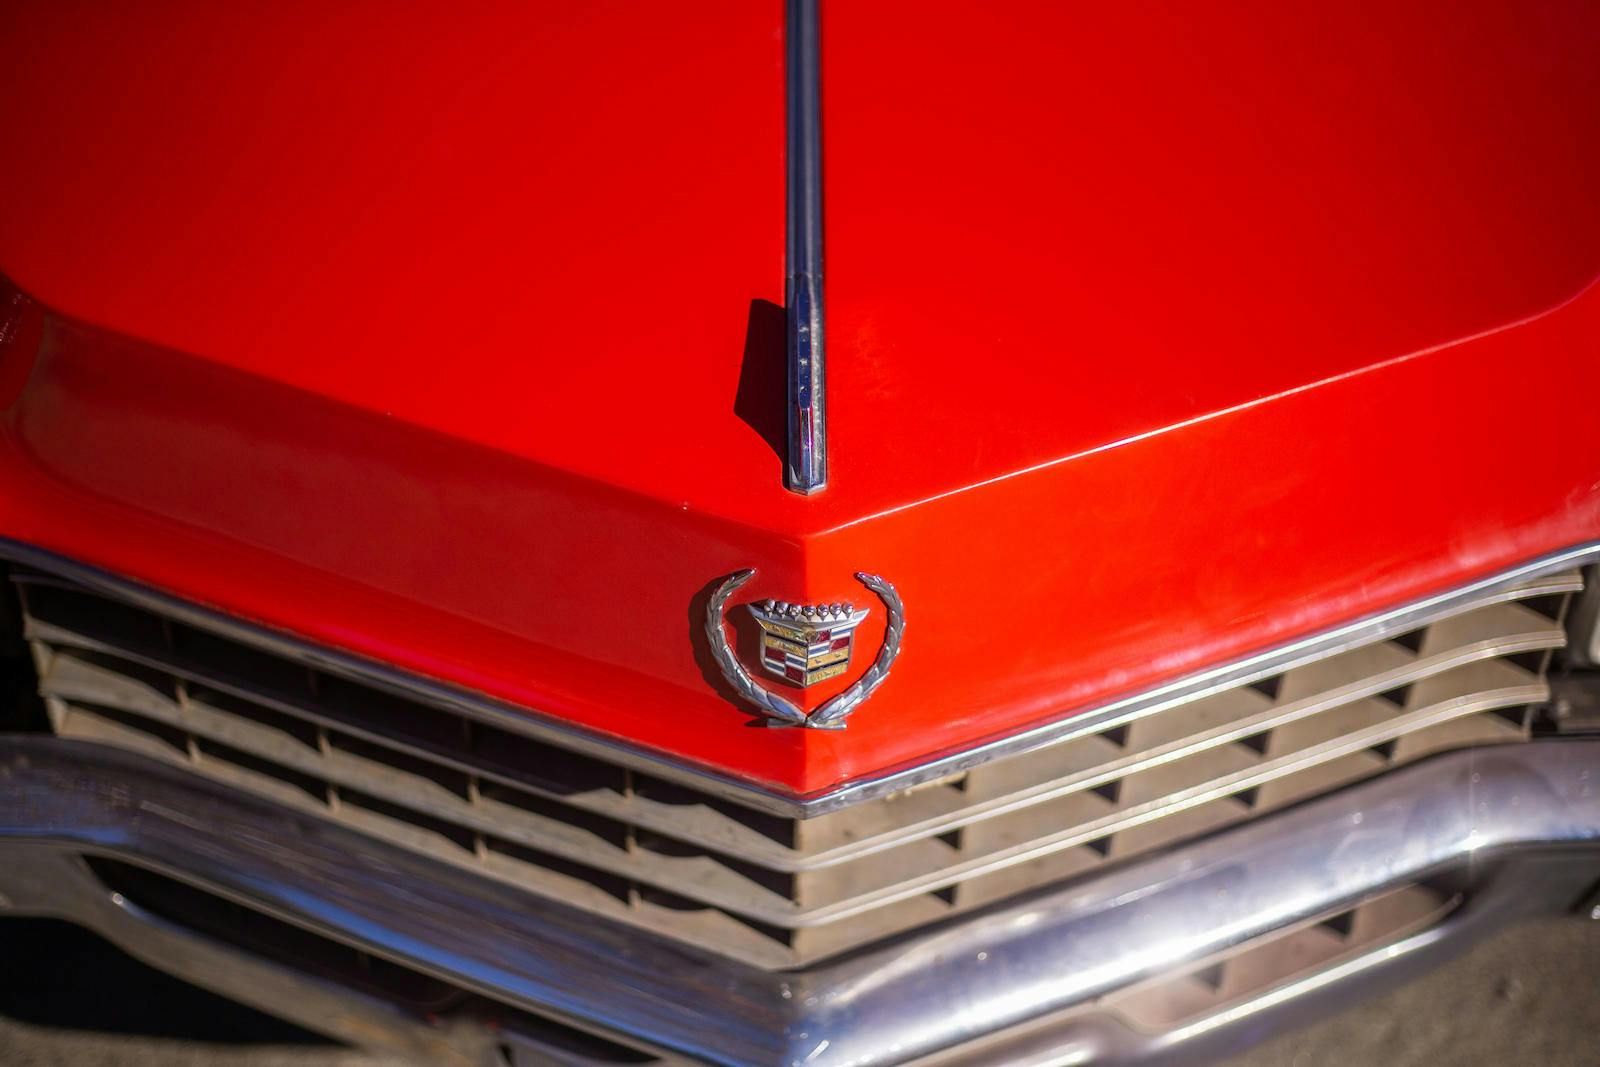 1967 Cadillac Eldorado front hood emblem